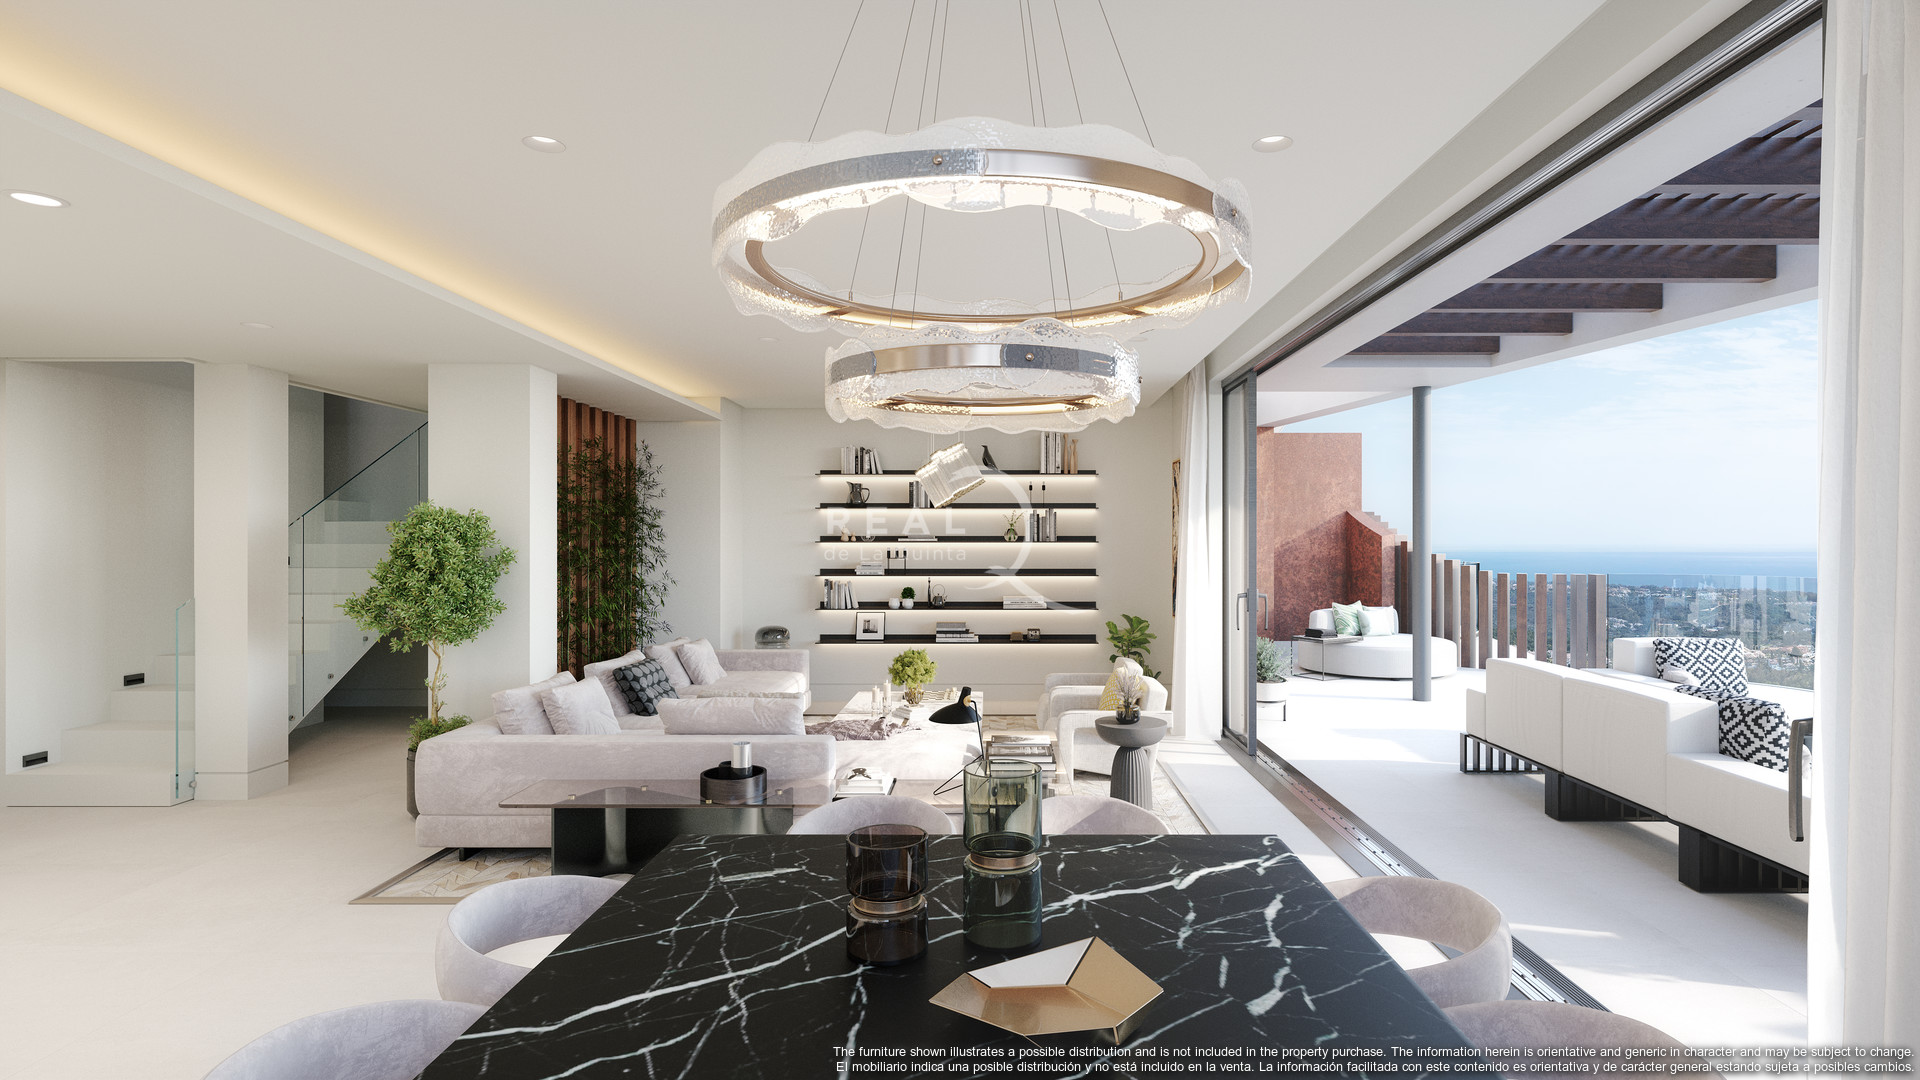 Sabinas: Luxury home decoration trends